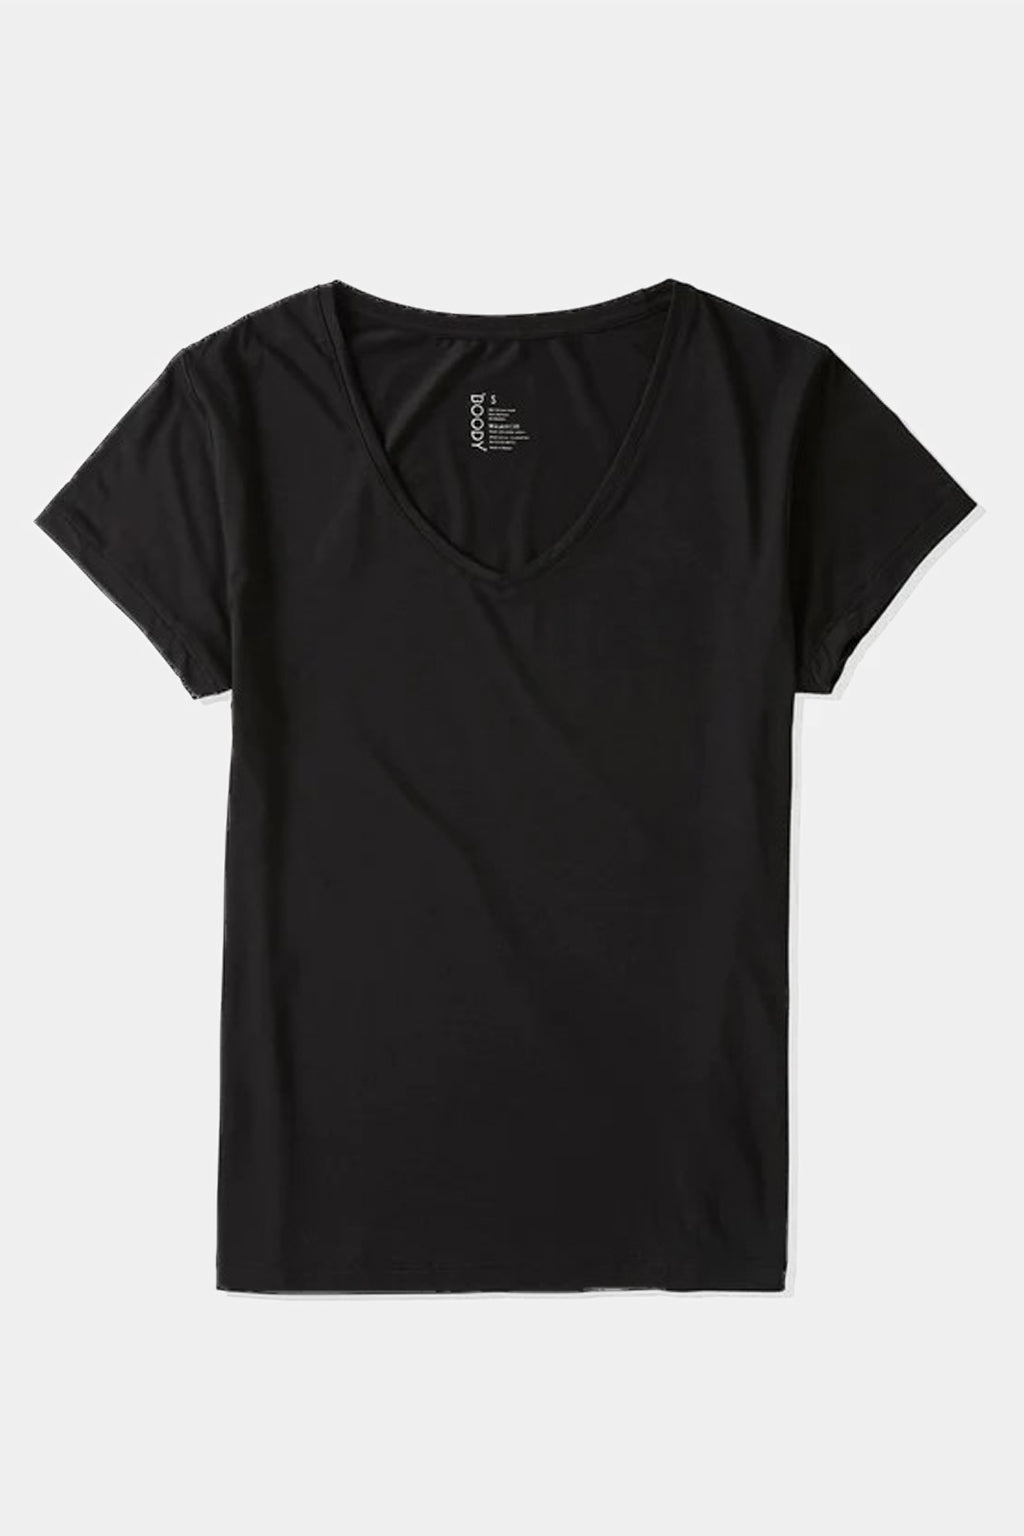 Boody - Women's V Neck T Shirt